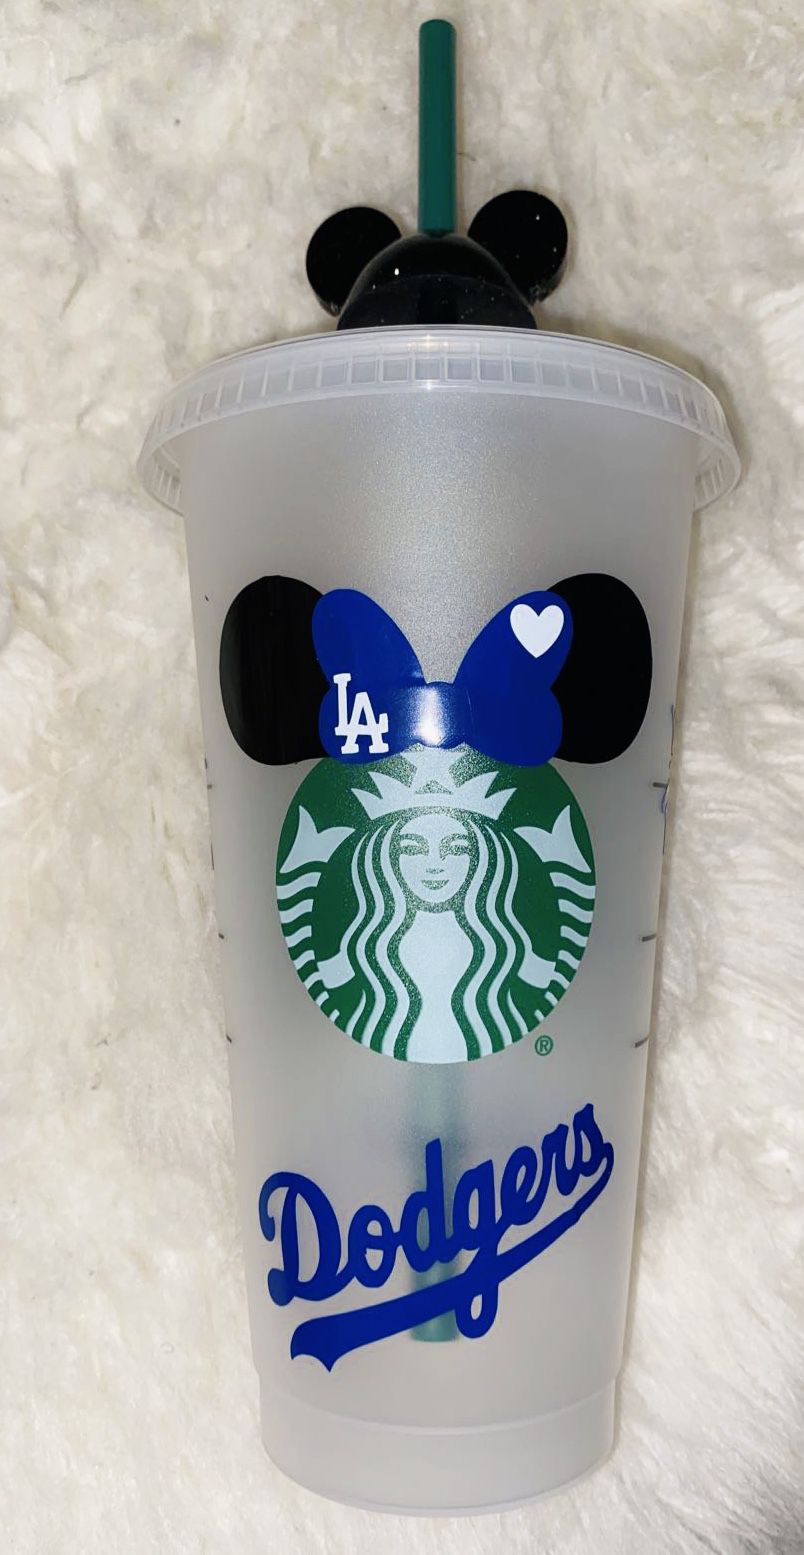 Dodgers / Disney Minnie Mouse custom Starbucks cold cup